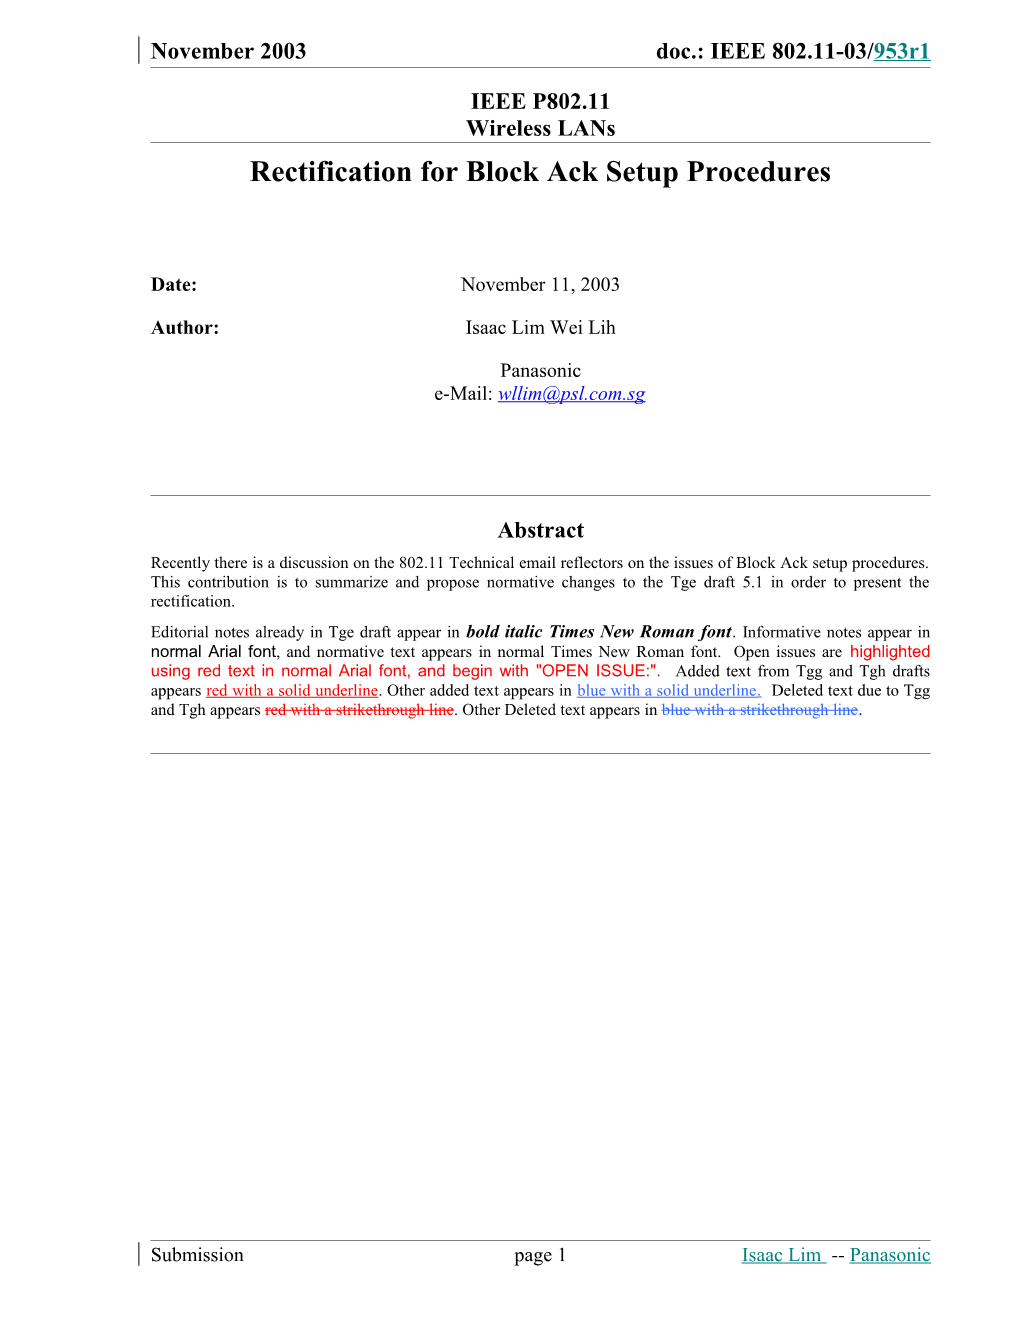 Rectification for Block Ack Setup Procedures